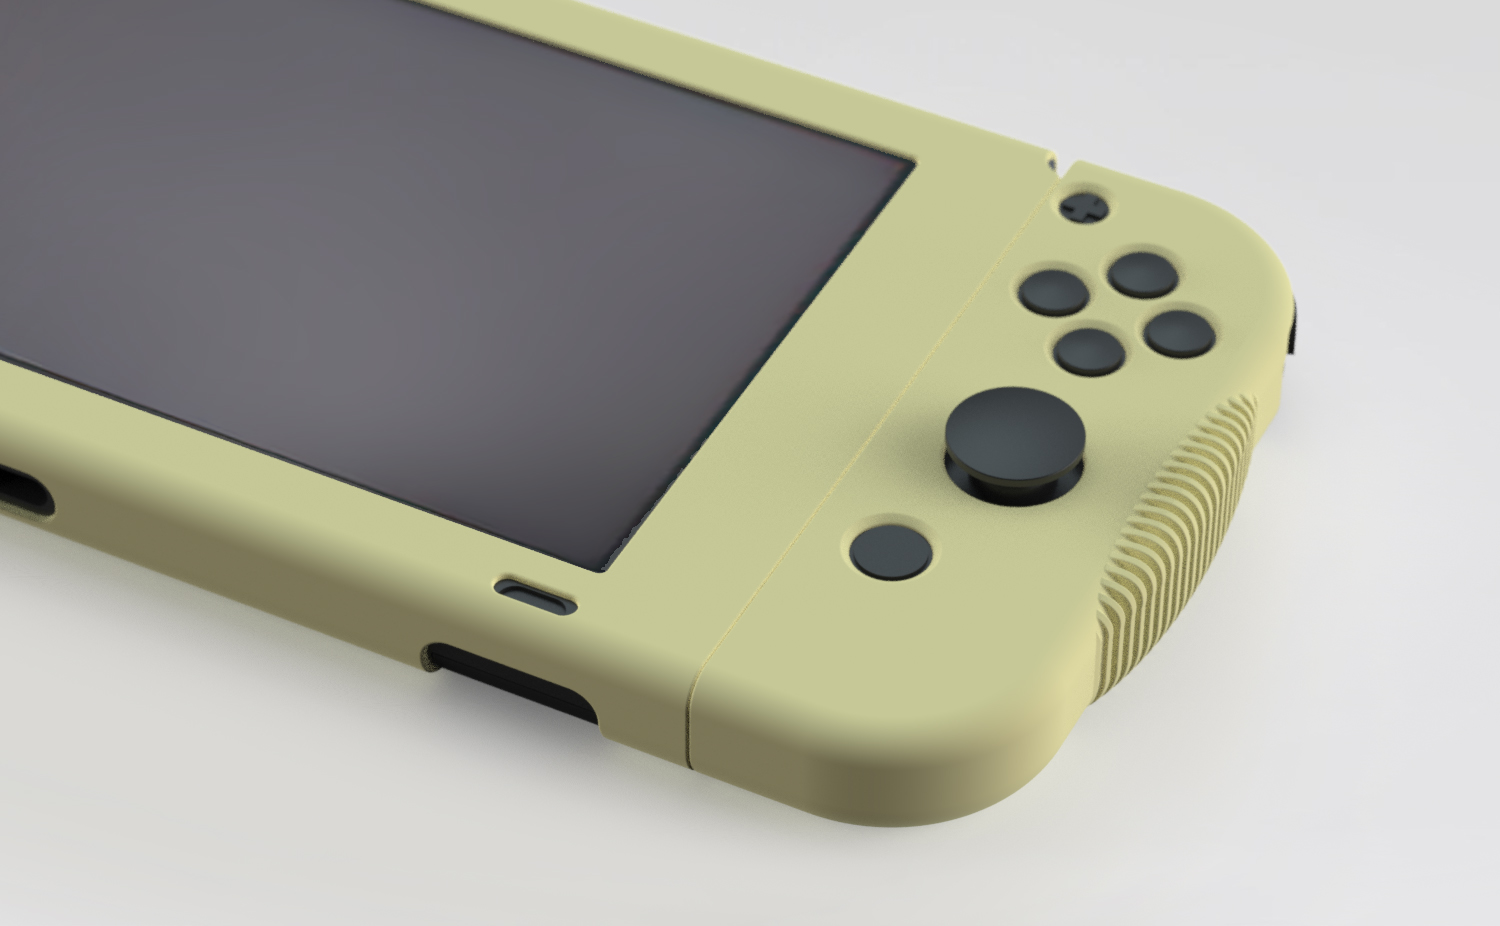 Nintendo Switch grip case: Main image